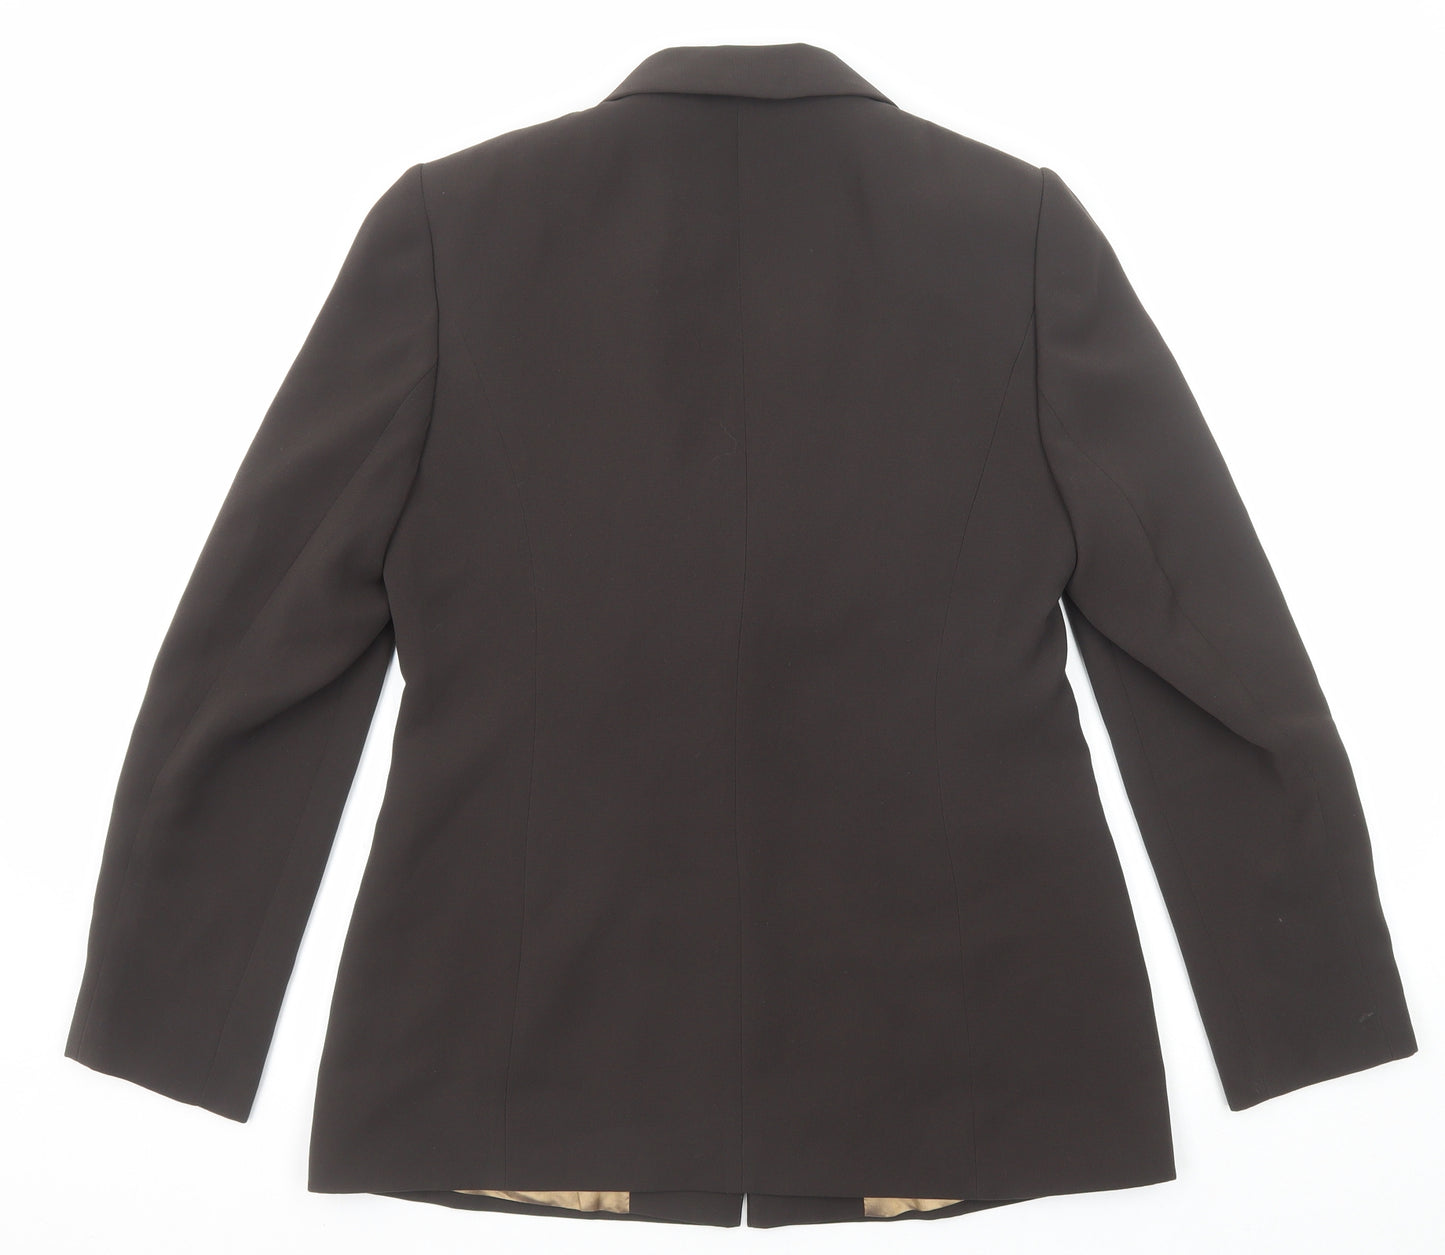 Principles Womens Brown Polyester Jacket Blazer Size 12